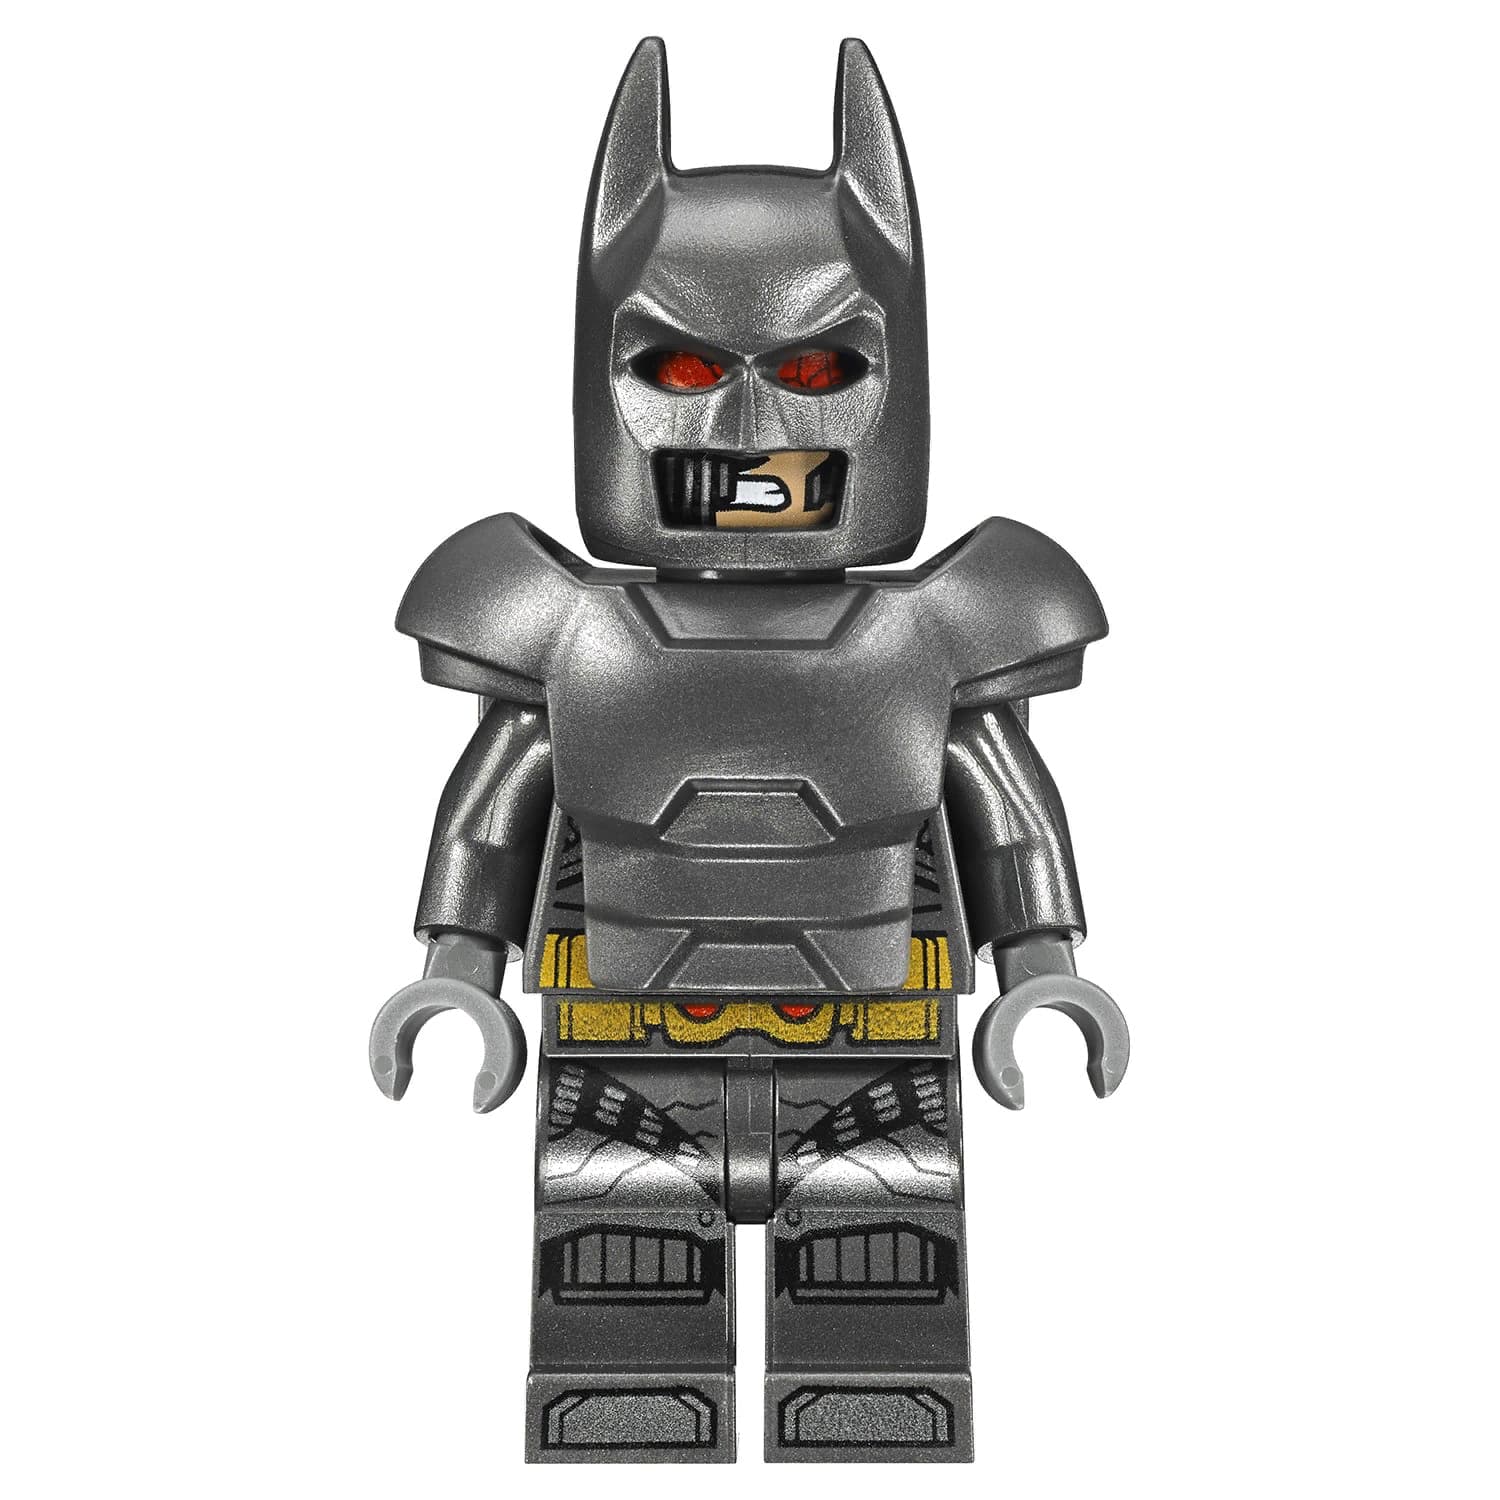 Конструктор LEGO Super Heroes «Бетмен: Нападение Когтей» 76110